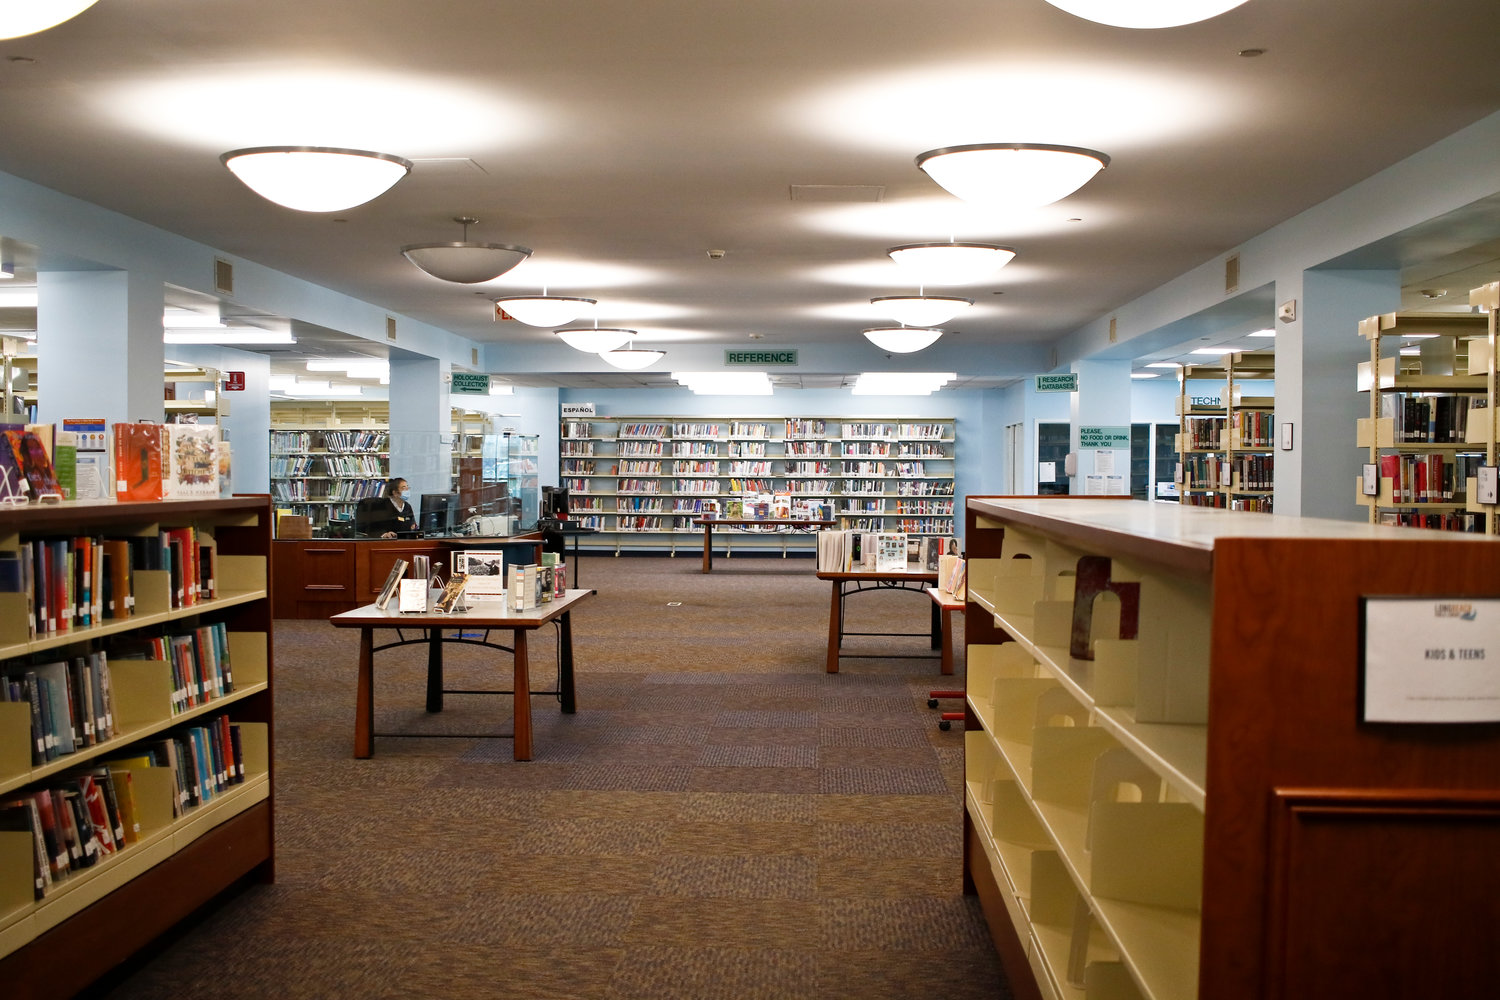 DonateUpdated  Long Beach Public Library (New York)